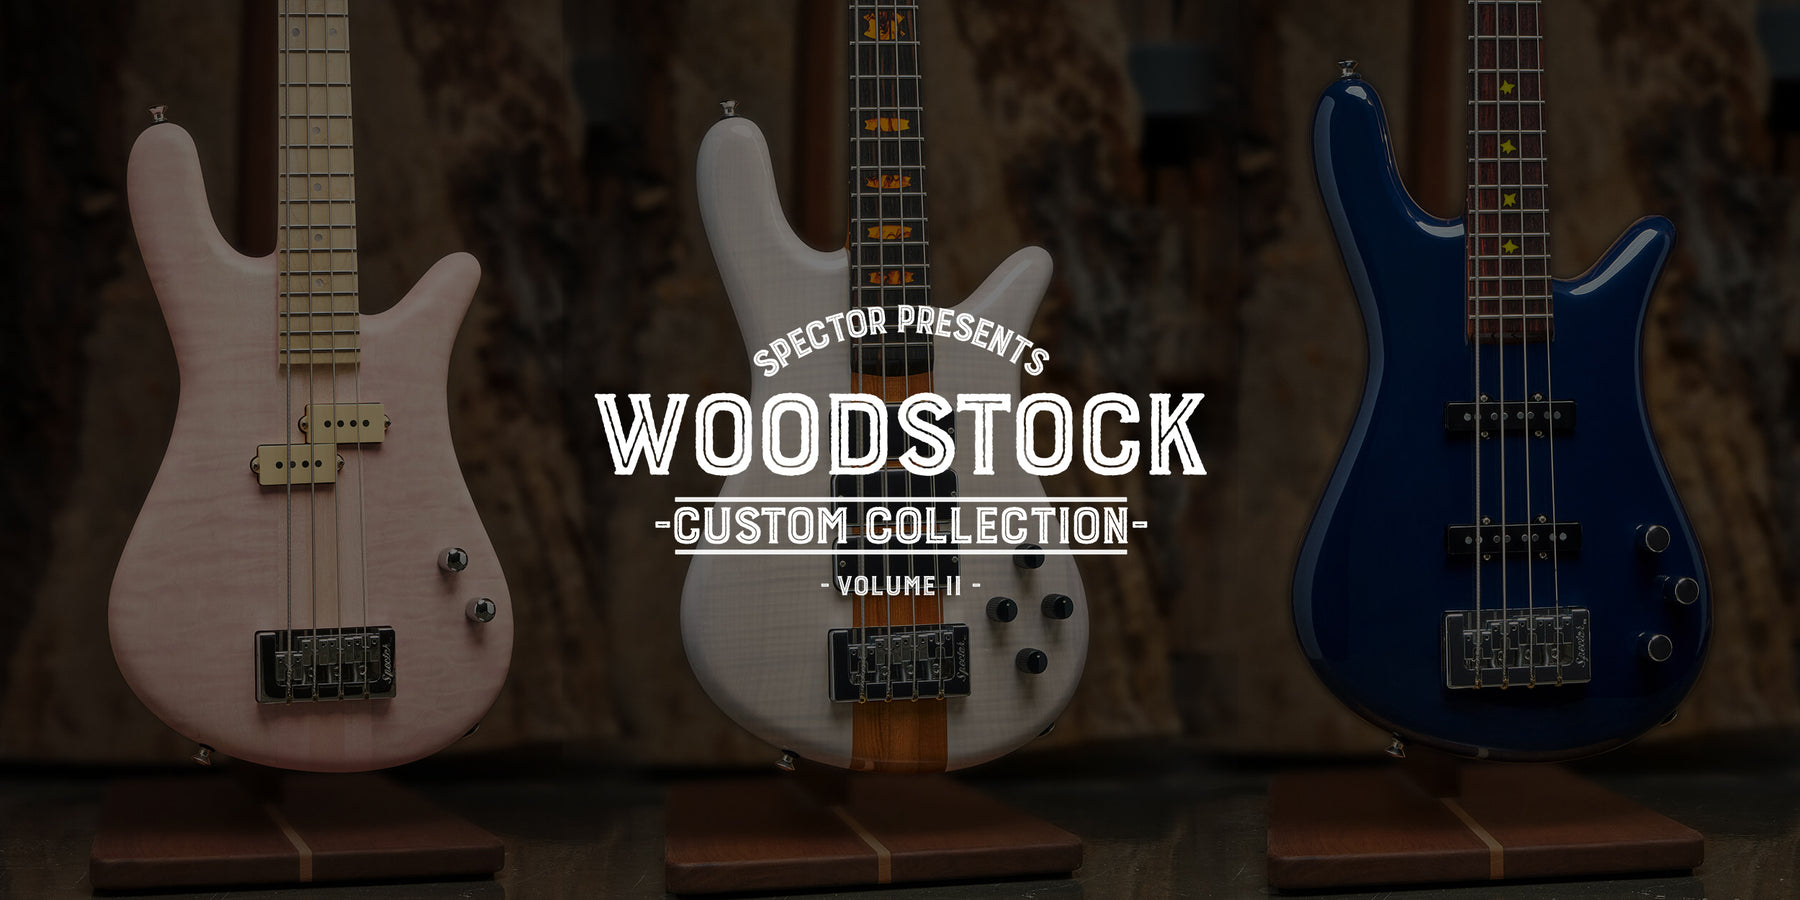 The Spector Woodstock Custom Collection Volume II